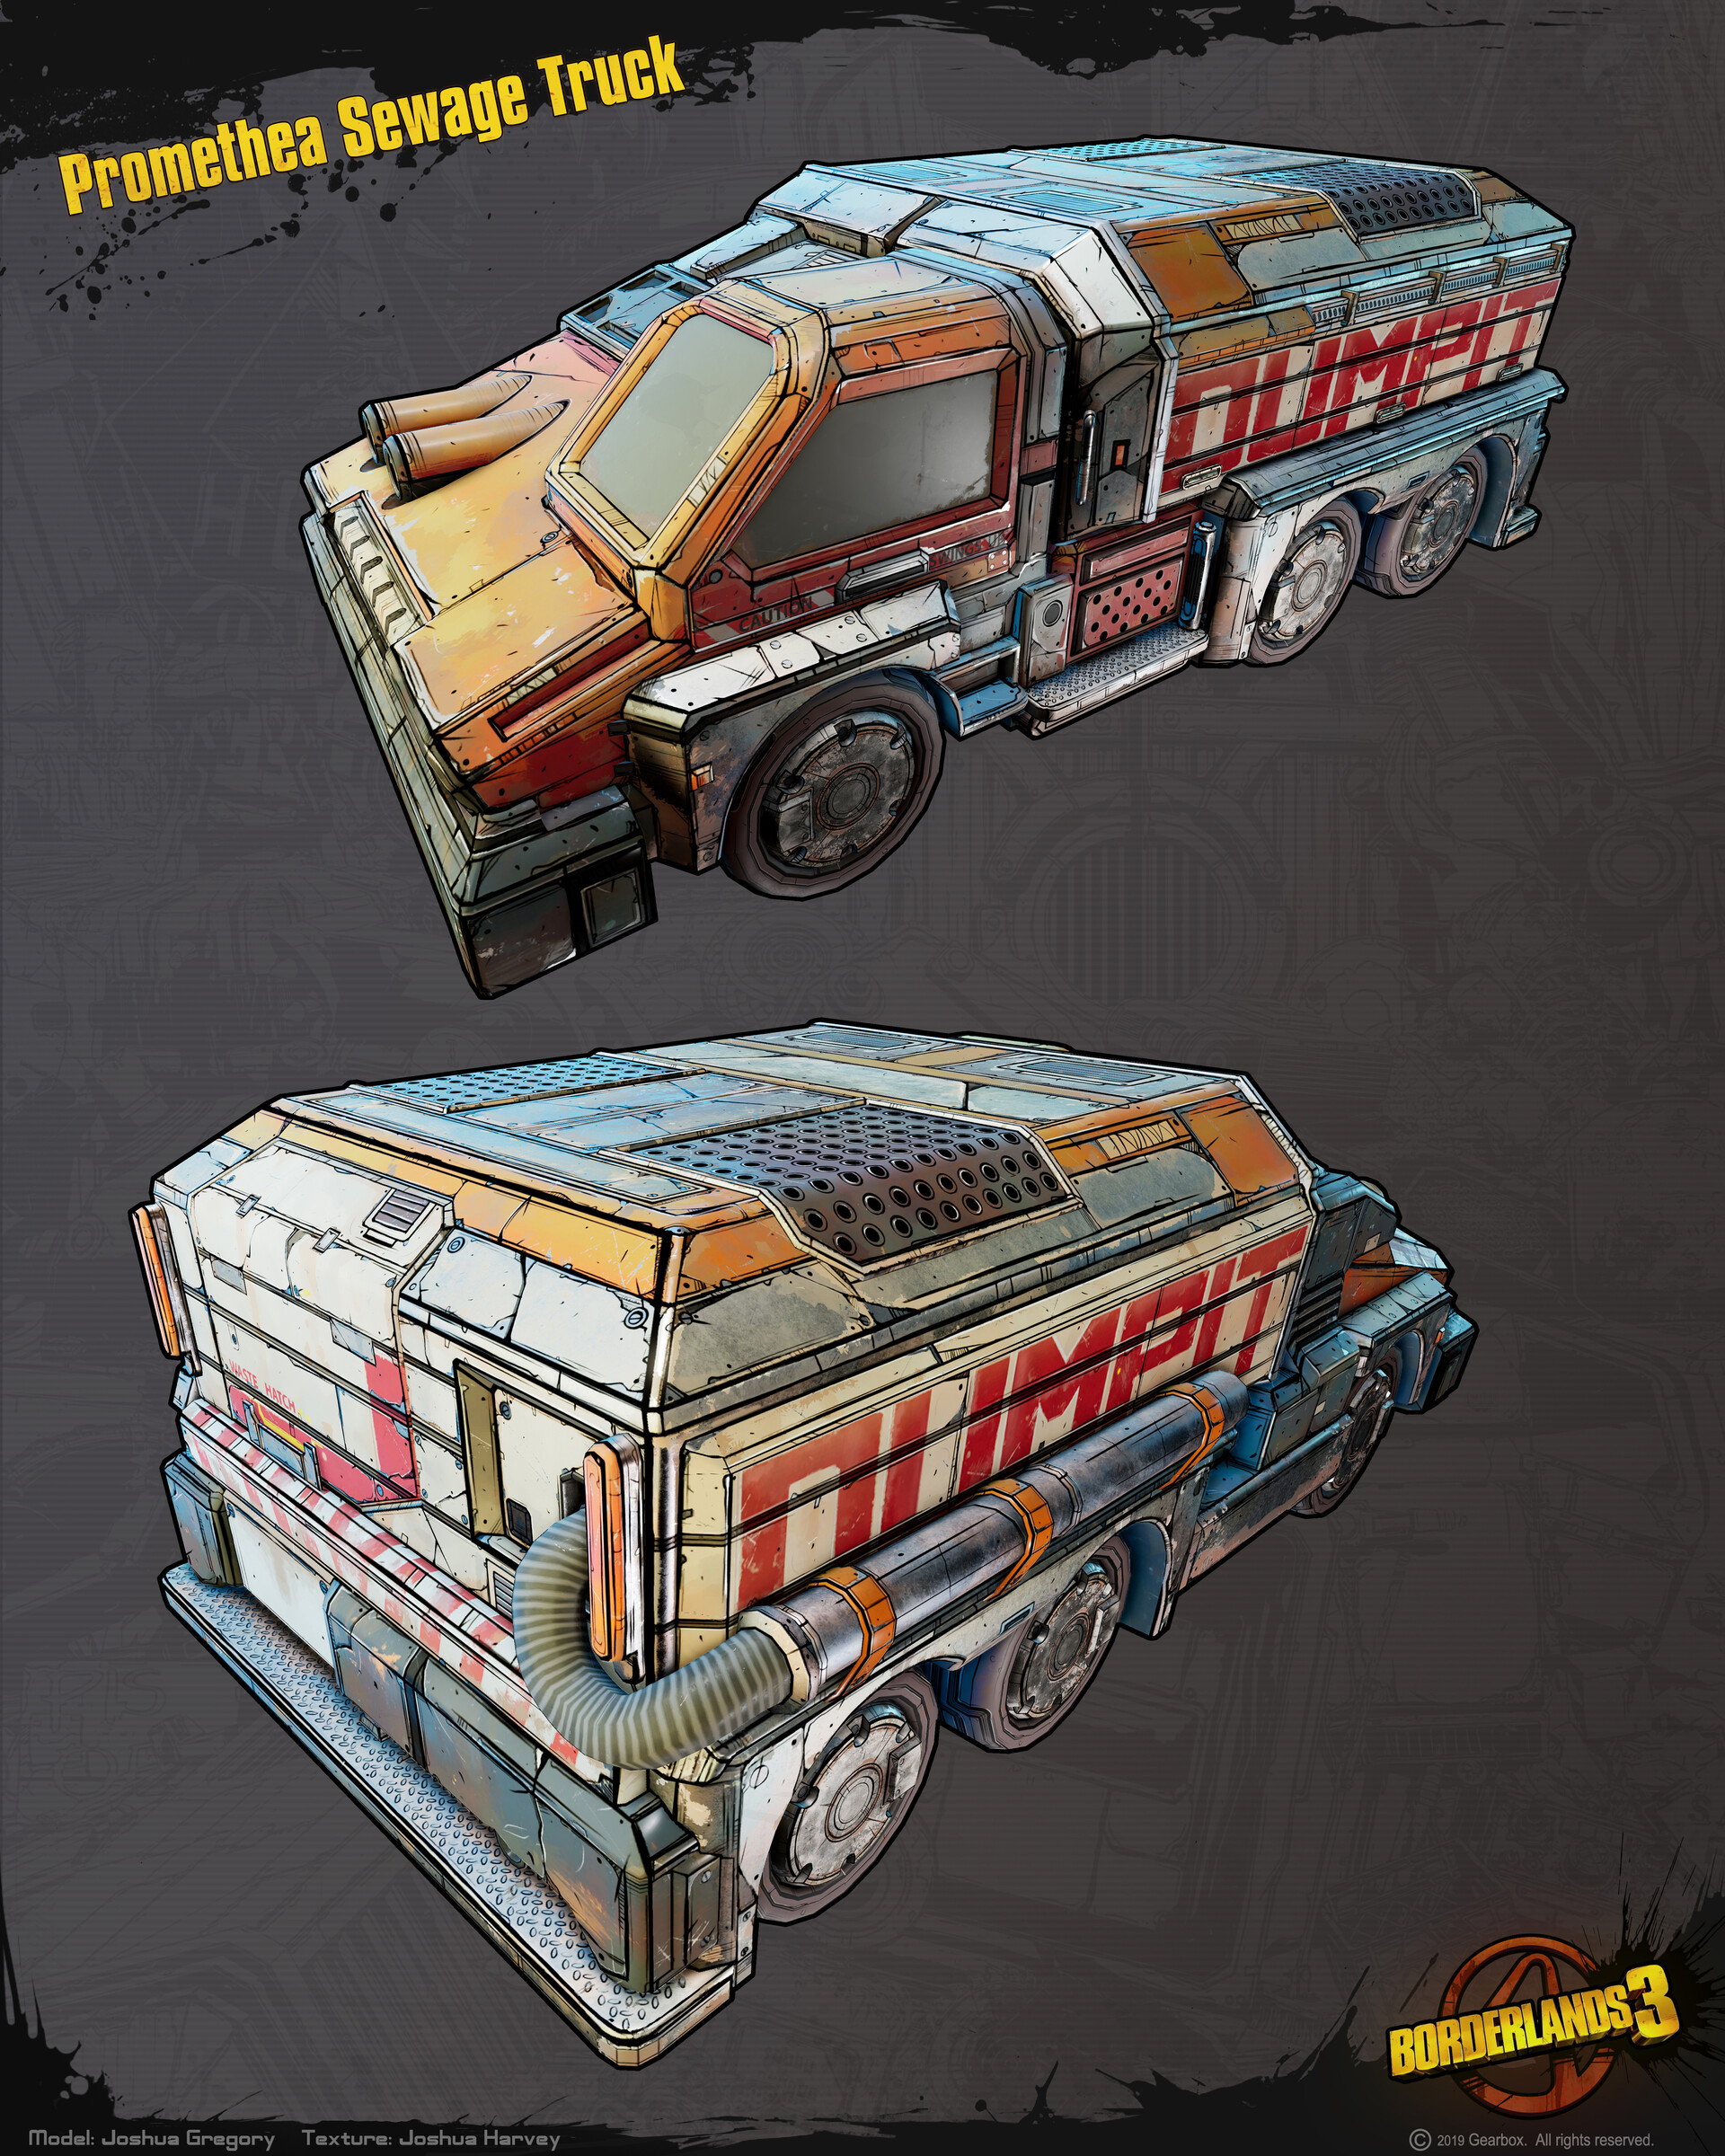 Josh Gregory - Borderlands 3: Promethea Modular Trucks.